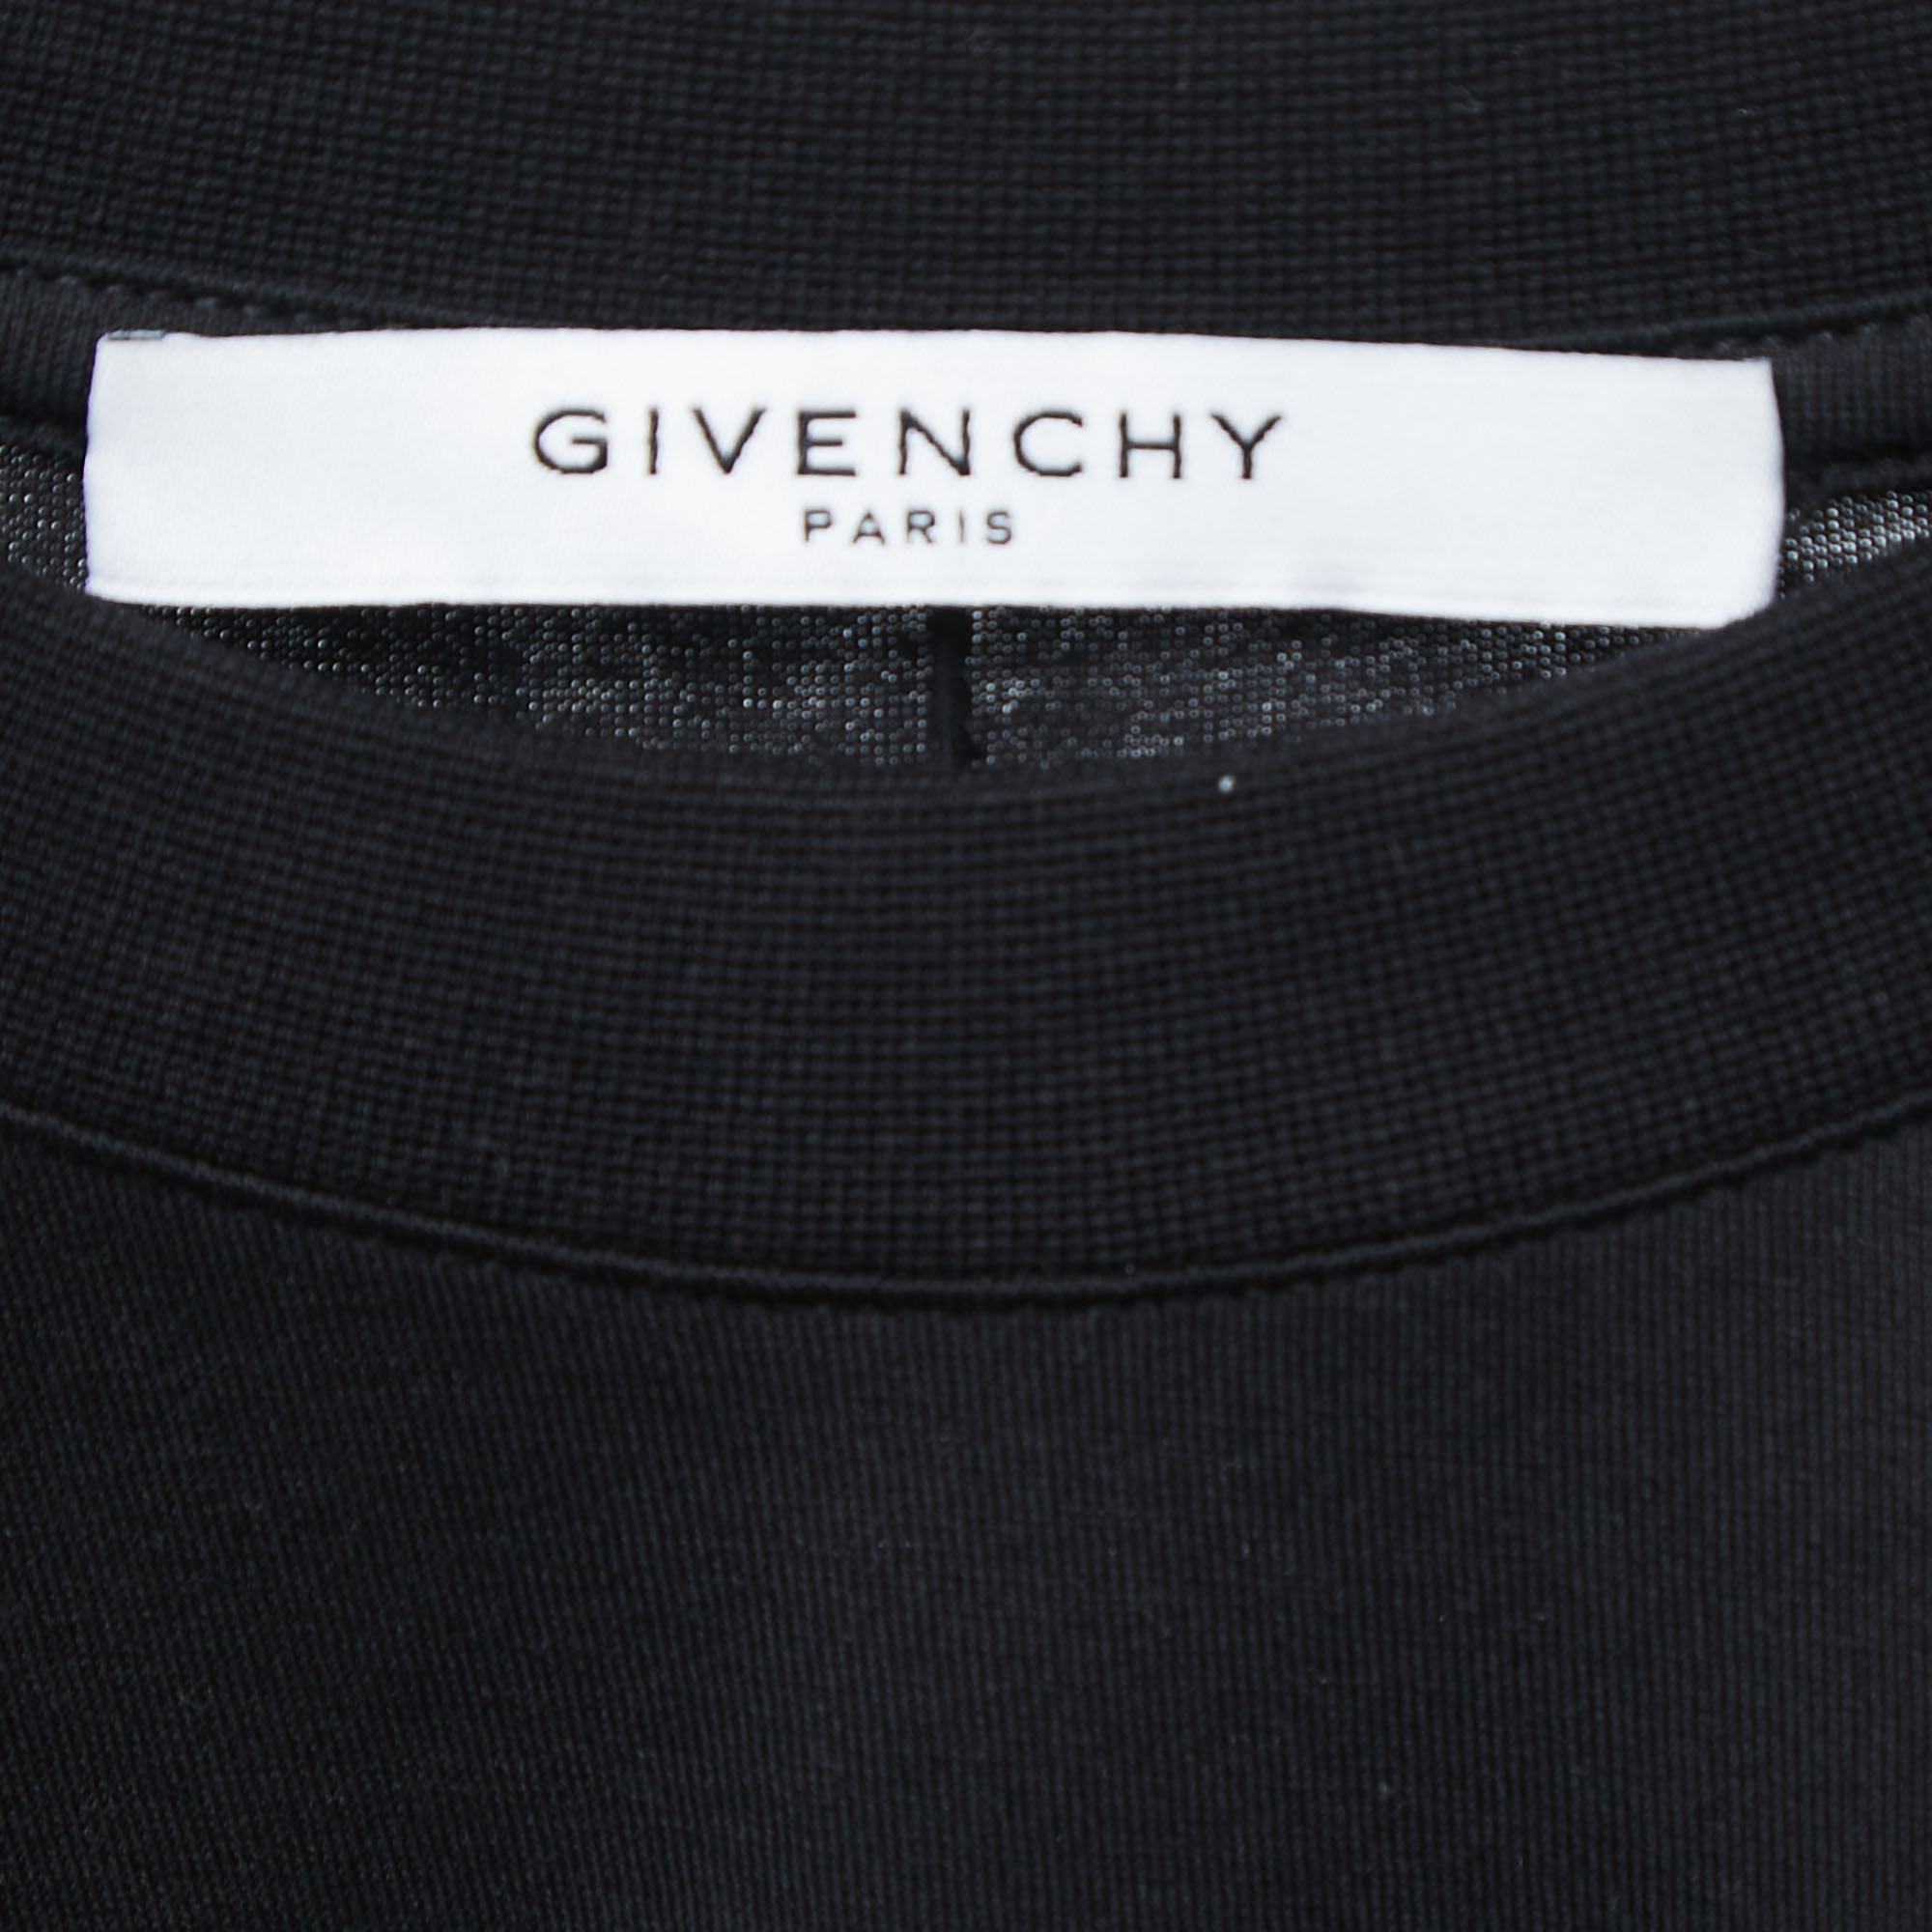 Givenchy Black Cotton Shark Printed T-Shirt S